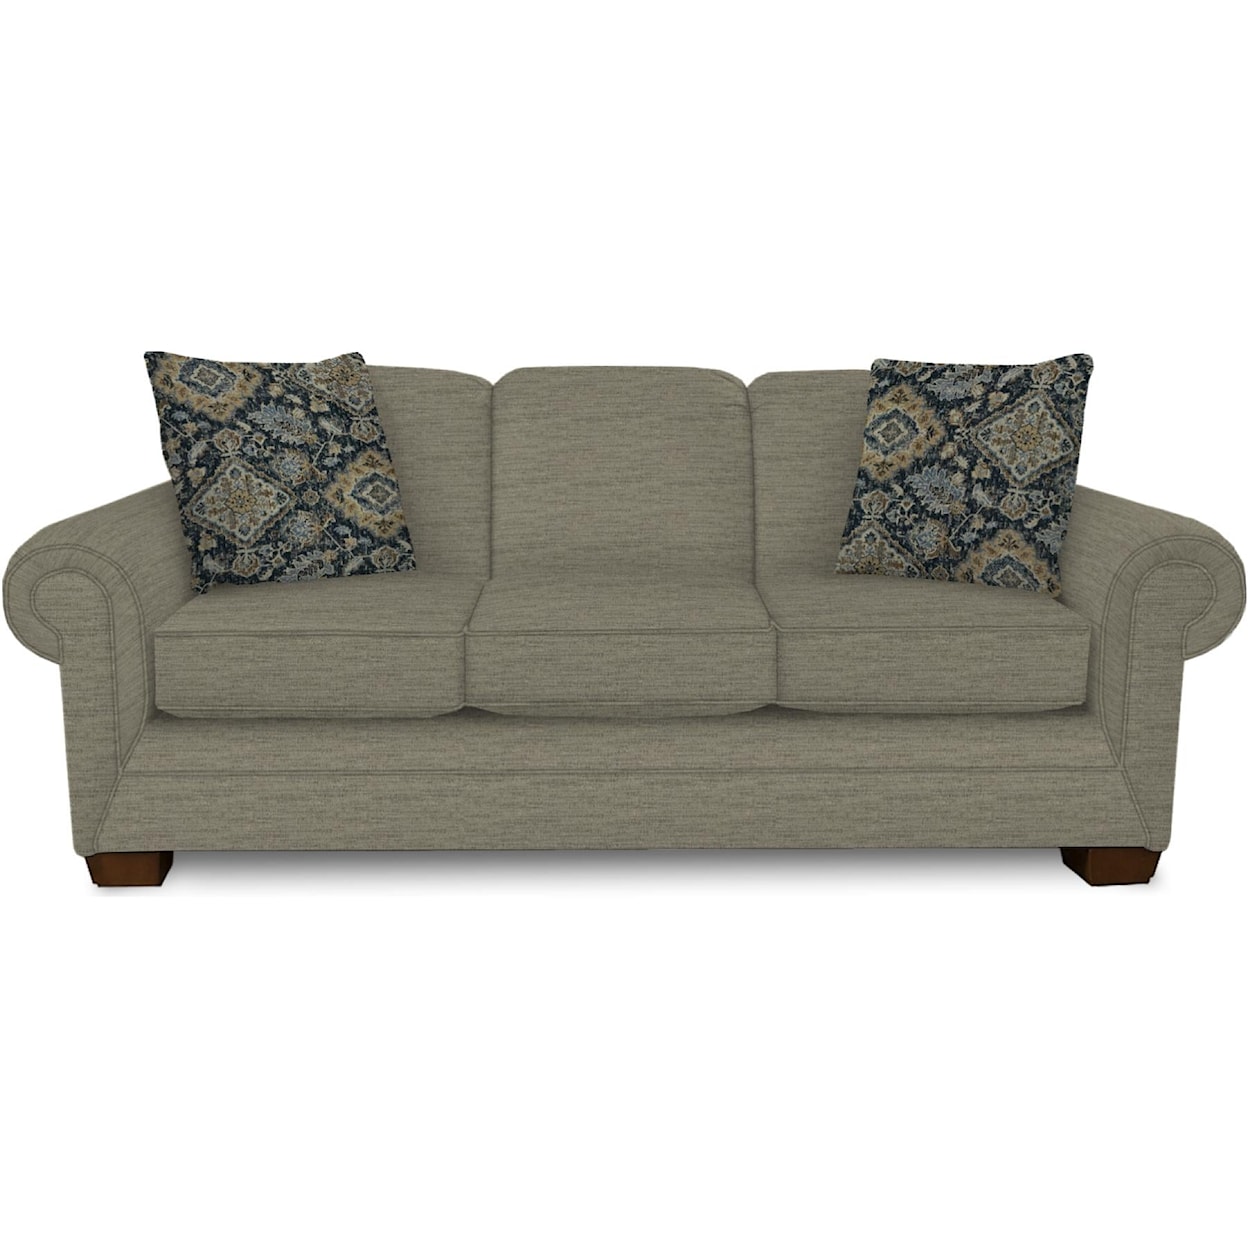 England 1430R/LSR Series Traditional Sofa